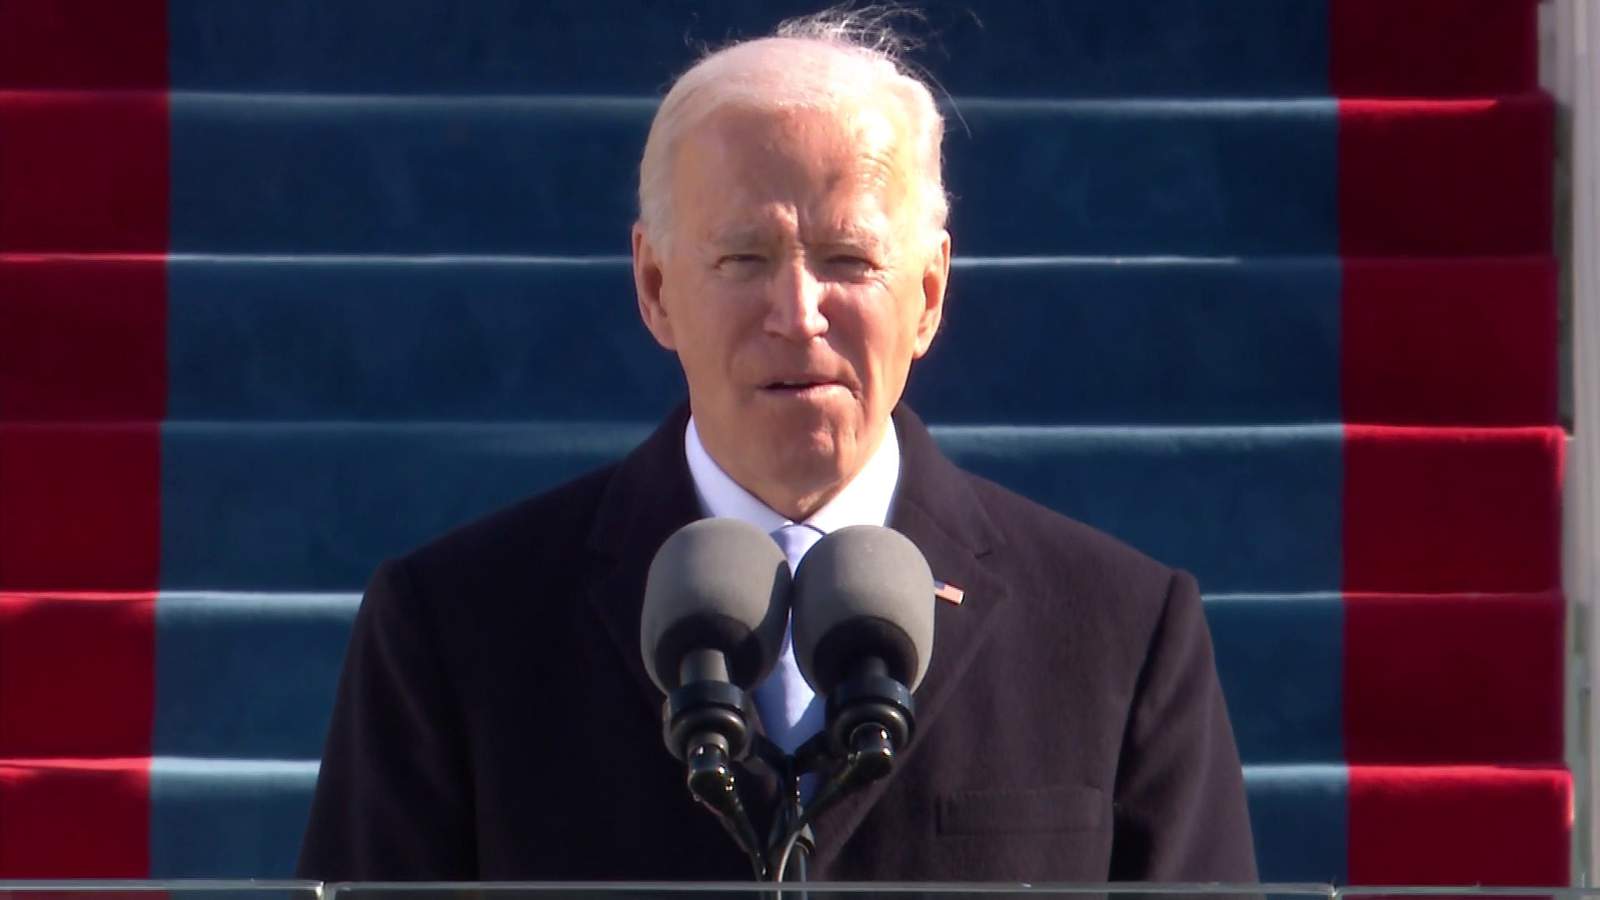 Here is Joe Biden’s full inaugural address as the 46th president